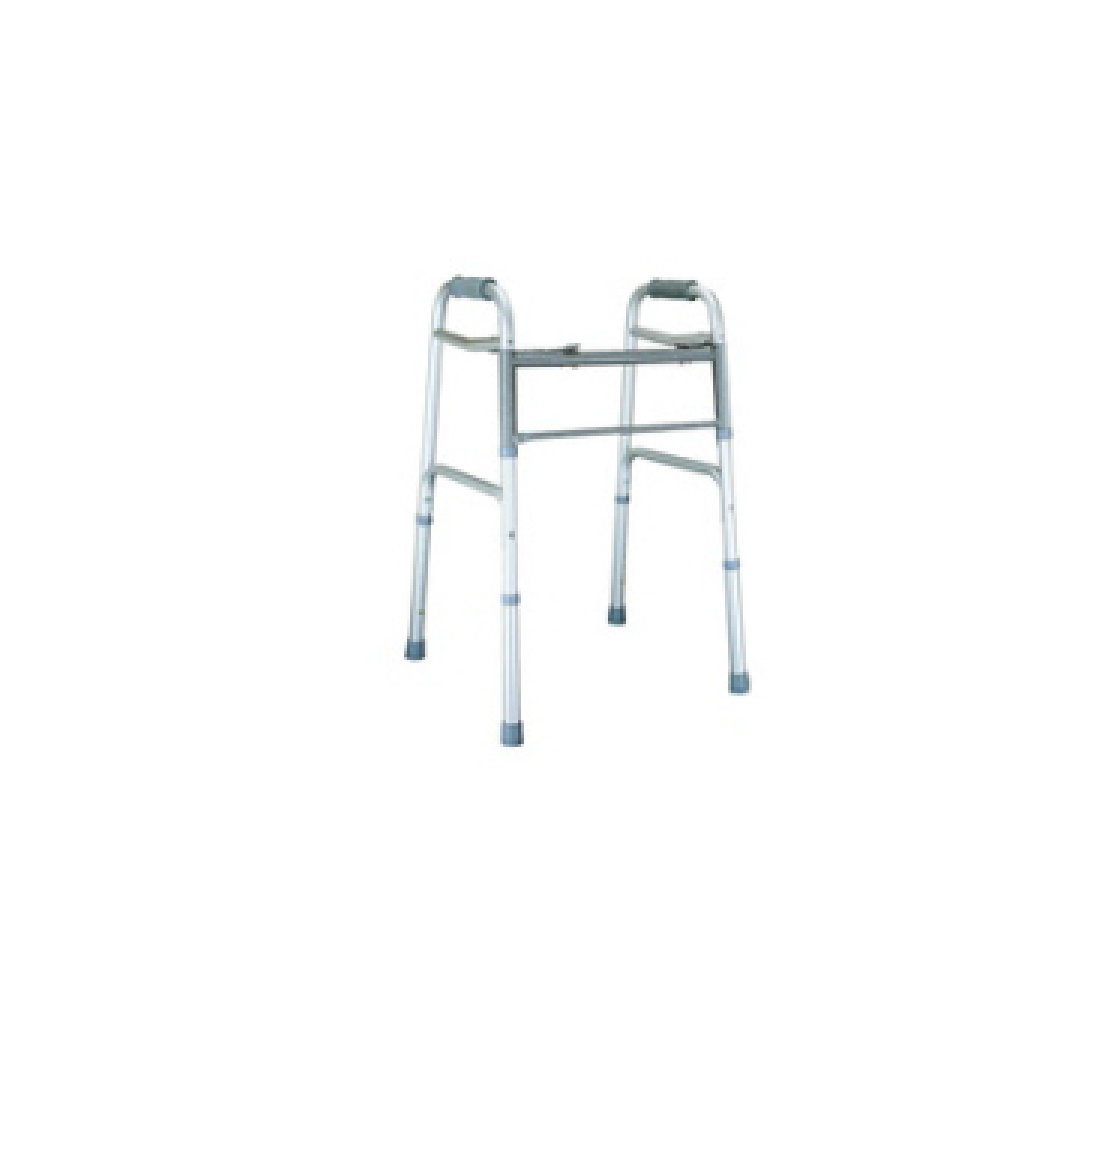 Handicapped orthopeadic product